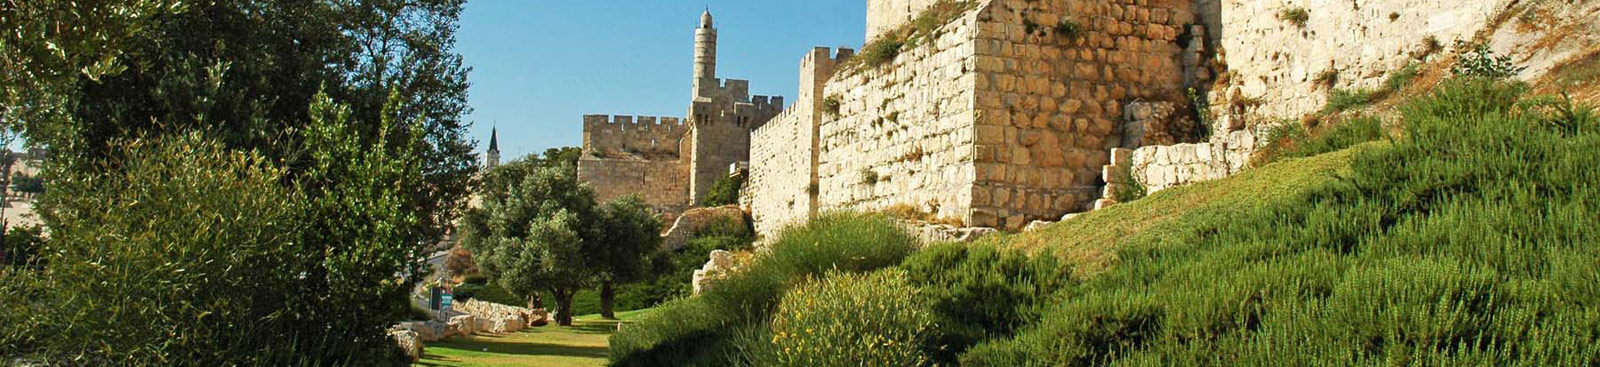 Jerusalem Wall Israel